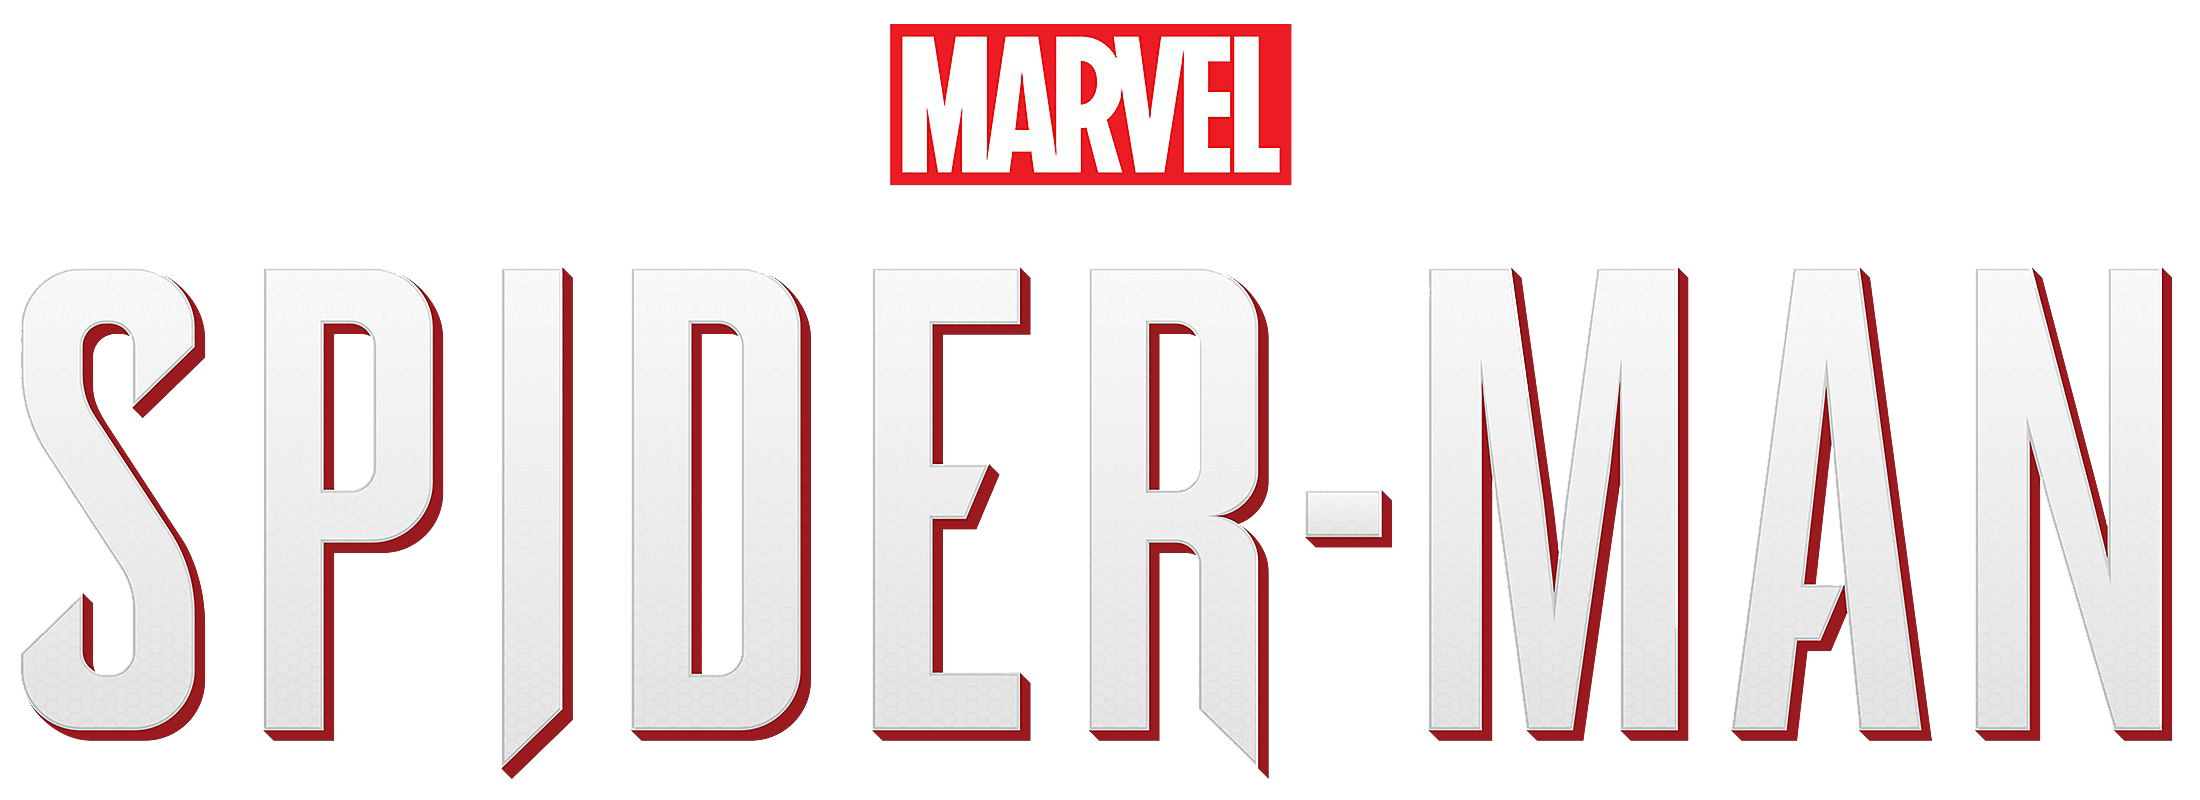 Download PNG image - Spider-Man Logo PNG HD 